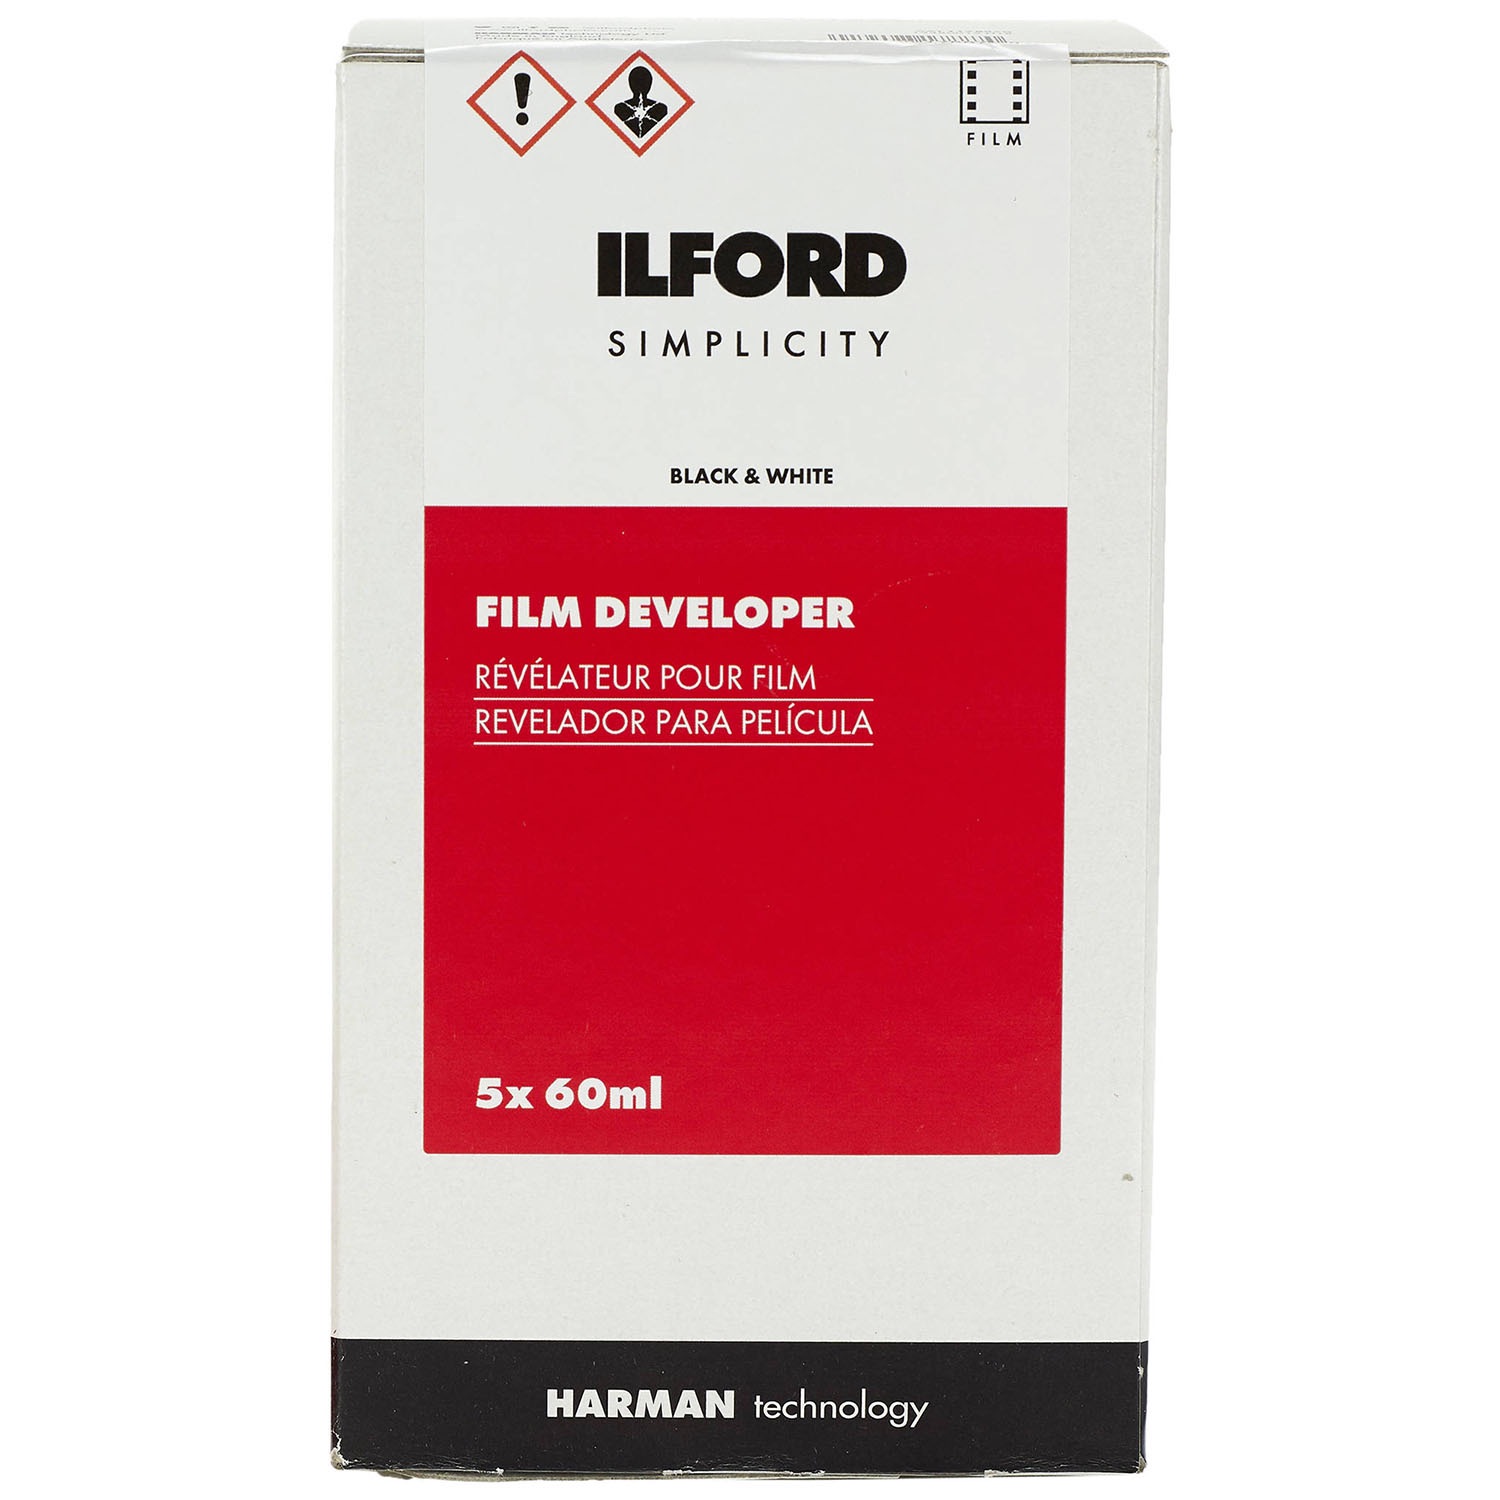 Ilford Simple Film Developer 5 Pack